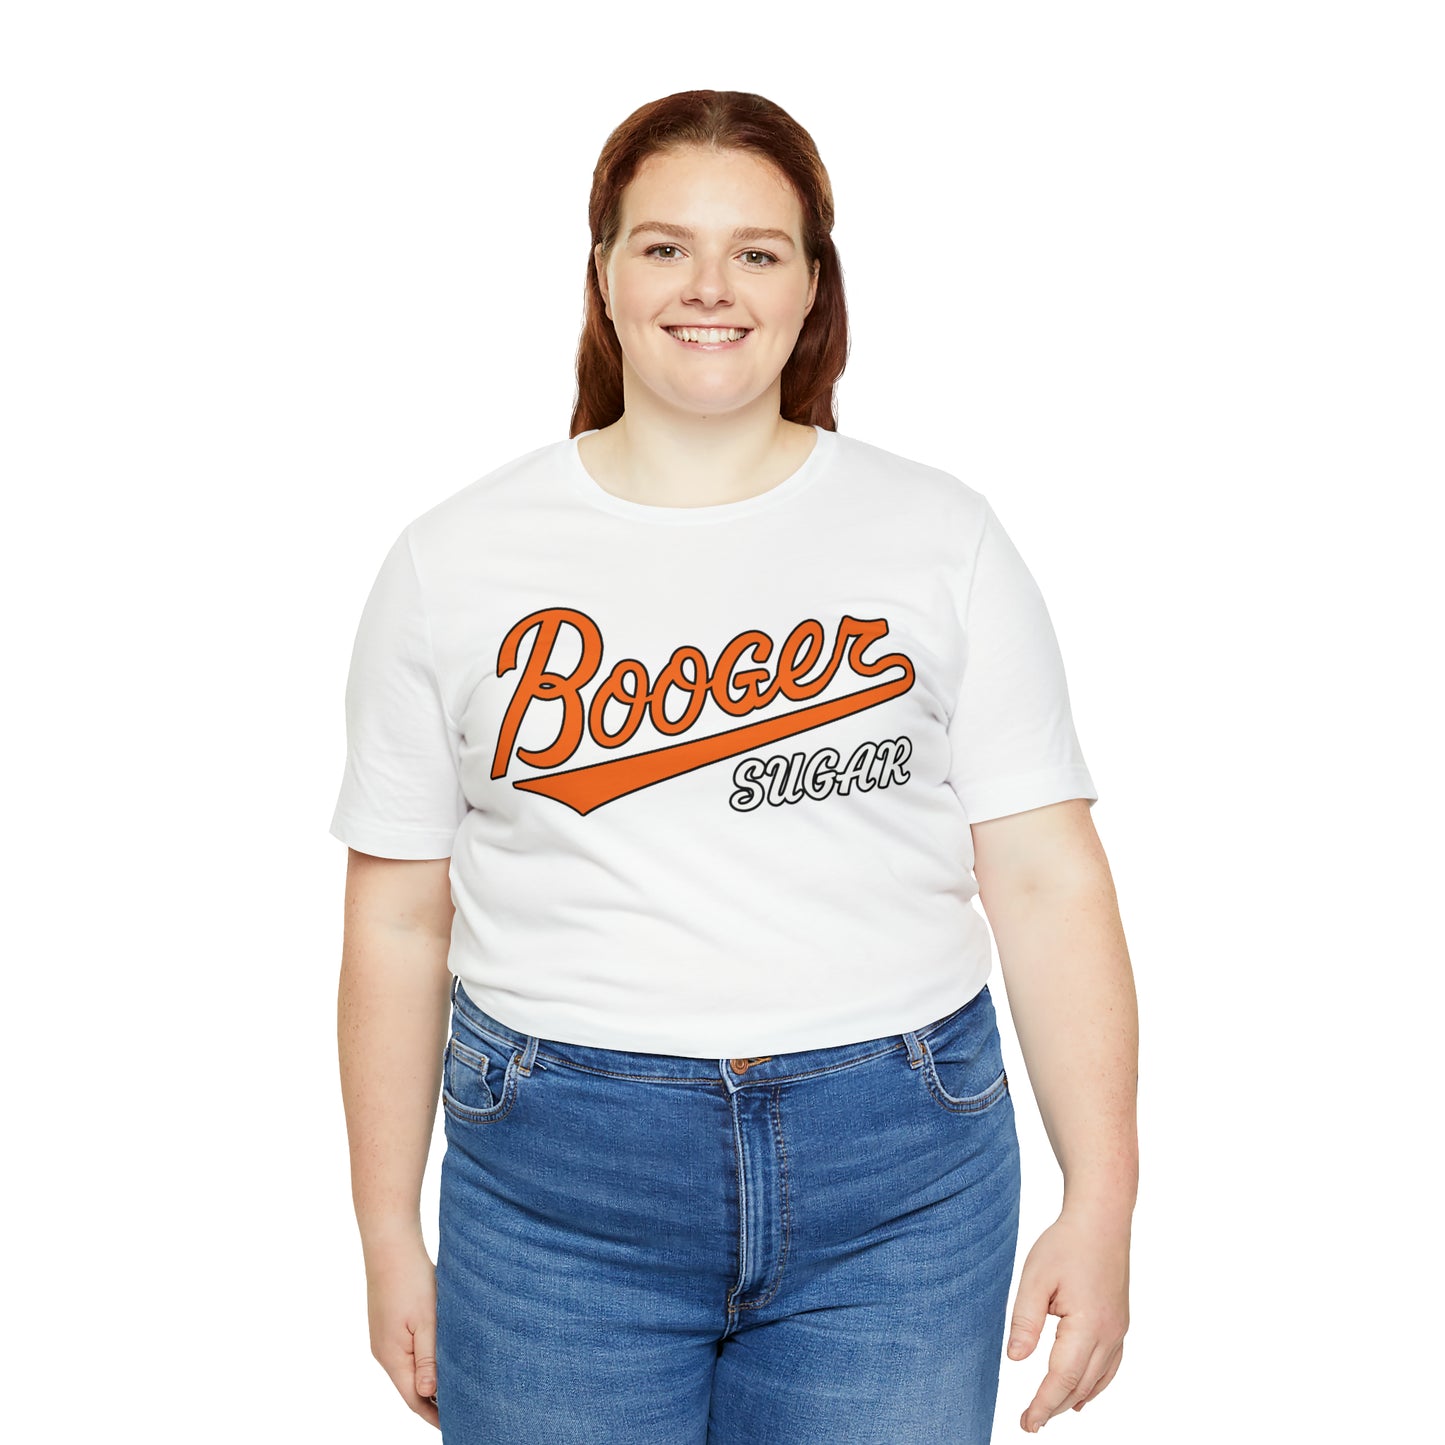 Booger Sugar Baltimore Orioles Baseball Style Funny Tee